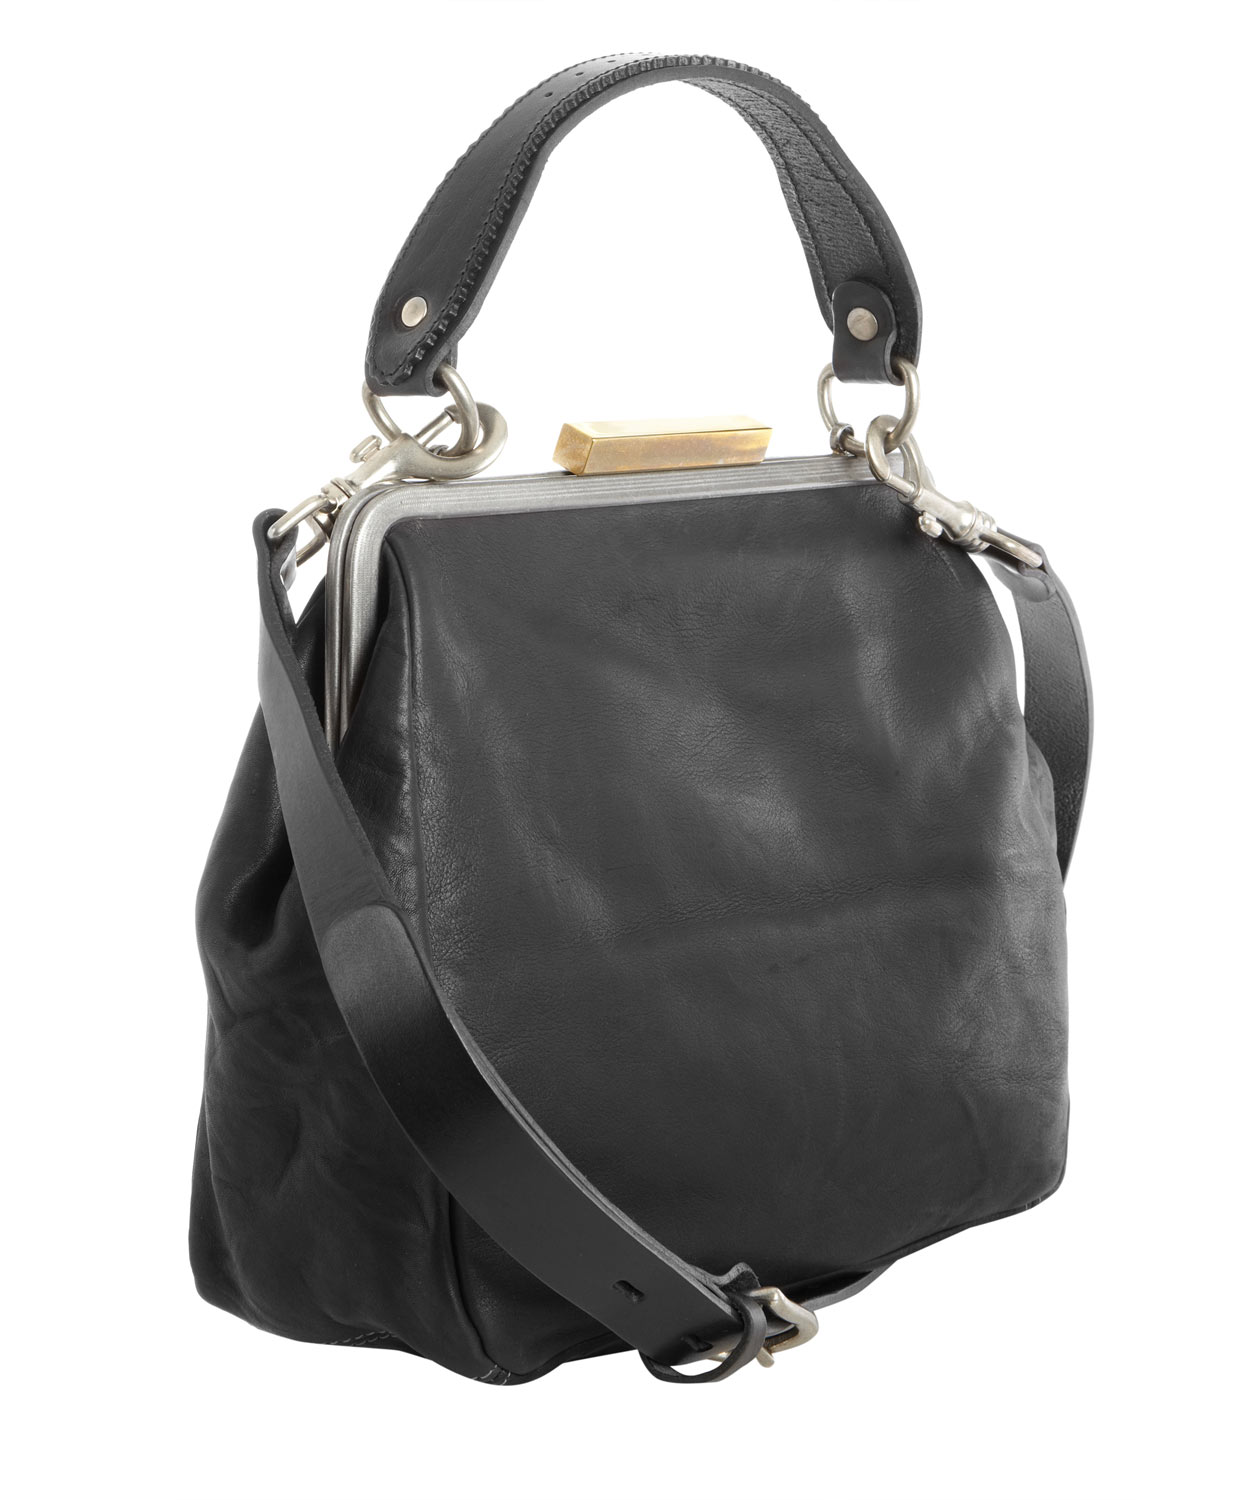 Lyst - Ally Capellino Black Kelly Frame Shoulder Bag in Black